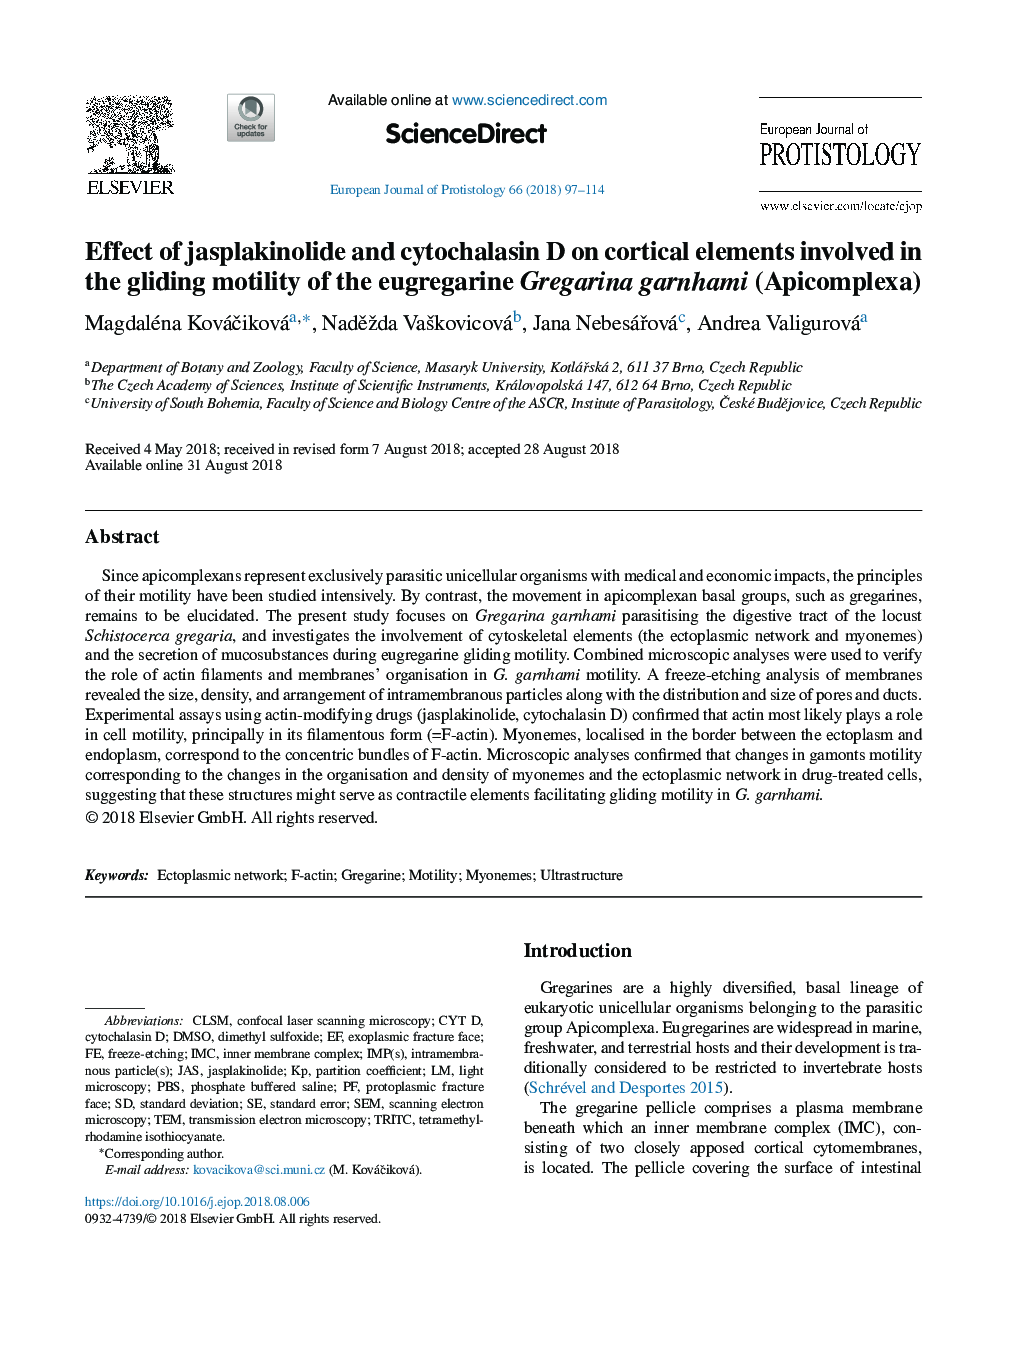 Effect of jasplakinolide and cytochalasin D on cortical elements involved in the gliding motility of the eugregarine Gregarina garnhami (Apicomplexa)